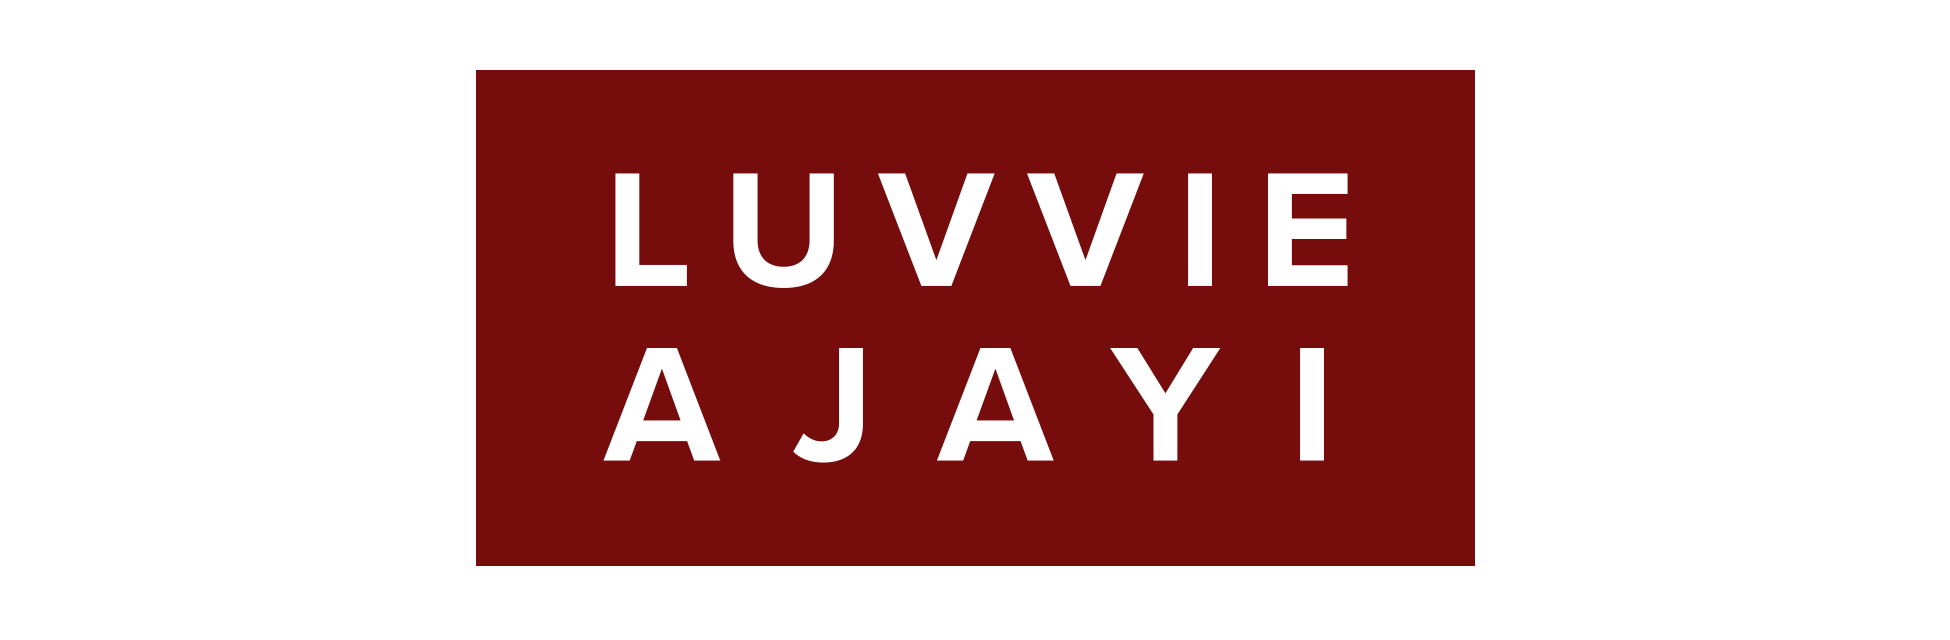 Luvvie Ajayi name mark